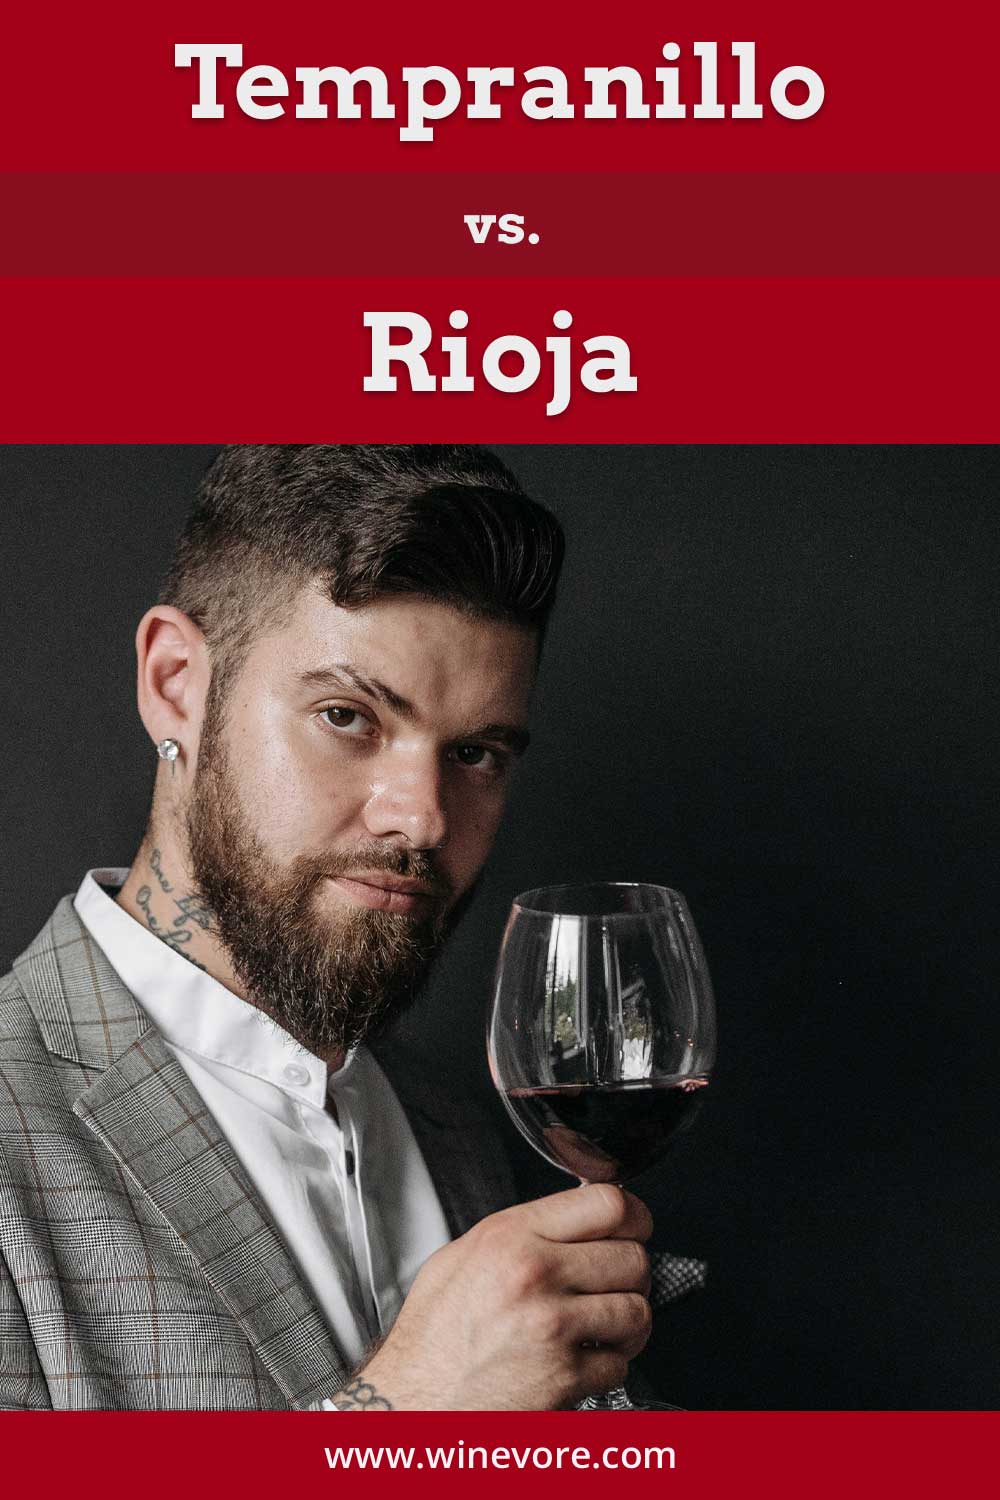 Man with a wine glass in hand - Tempranillo vs. Rioja.